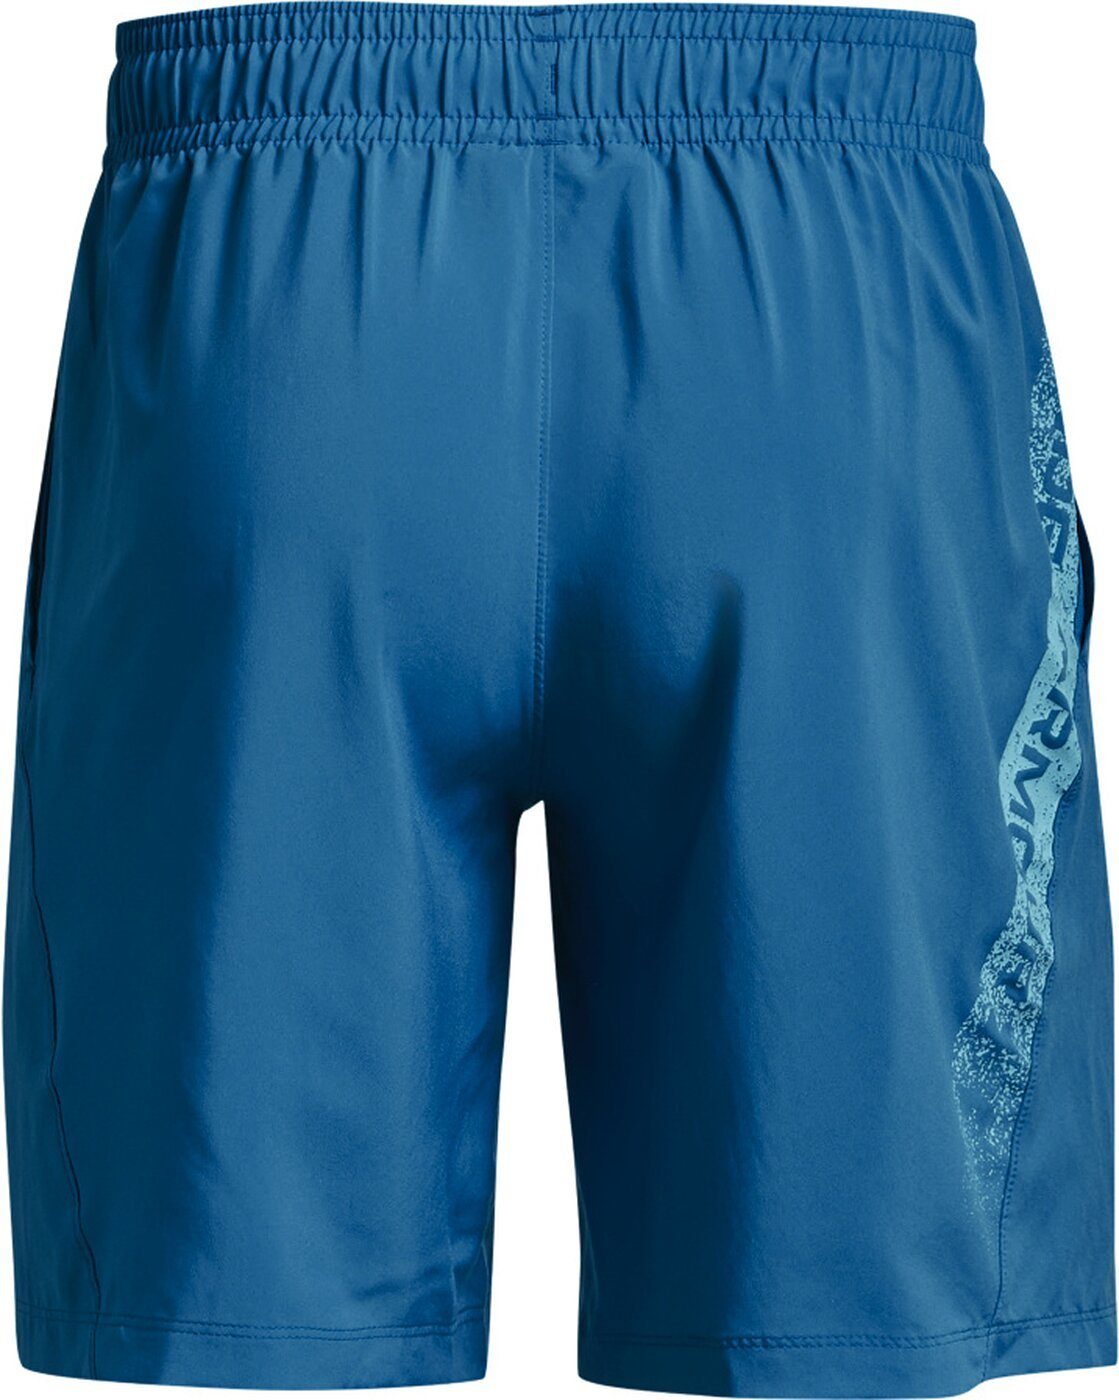 Under Armour® Shorts UA WOVEN 899 BLUE GRAPHIC 899 CRUISE SHORTS